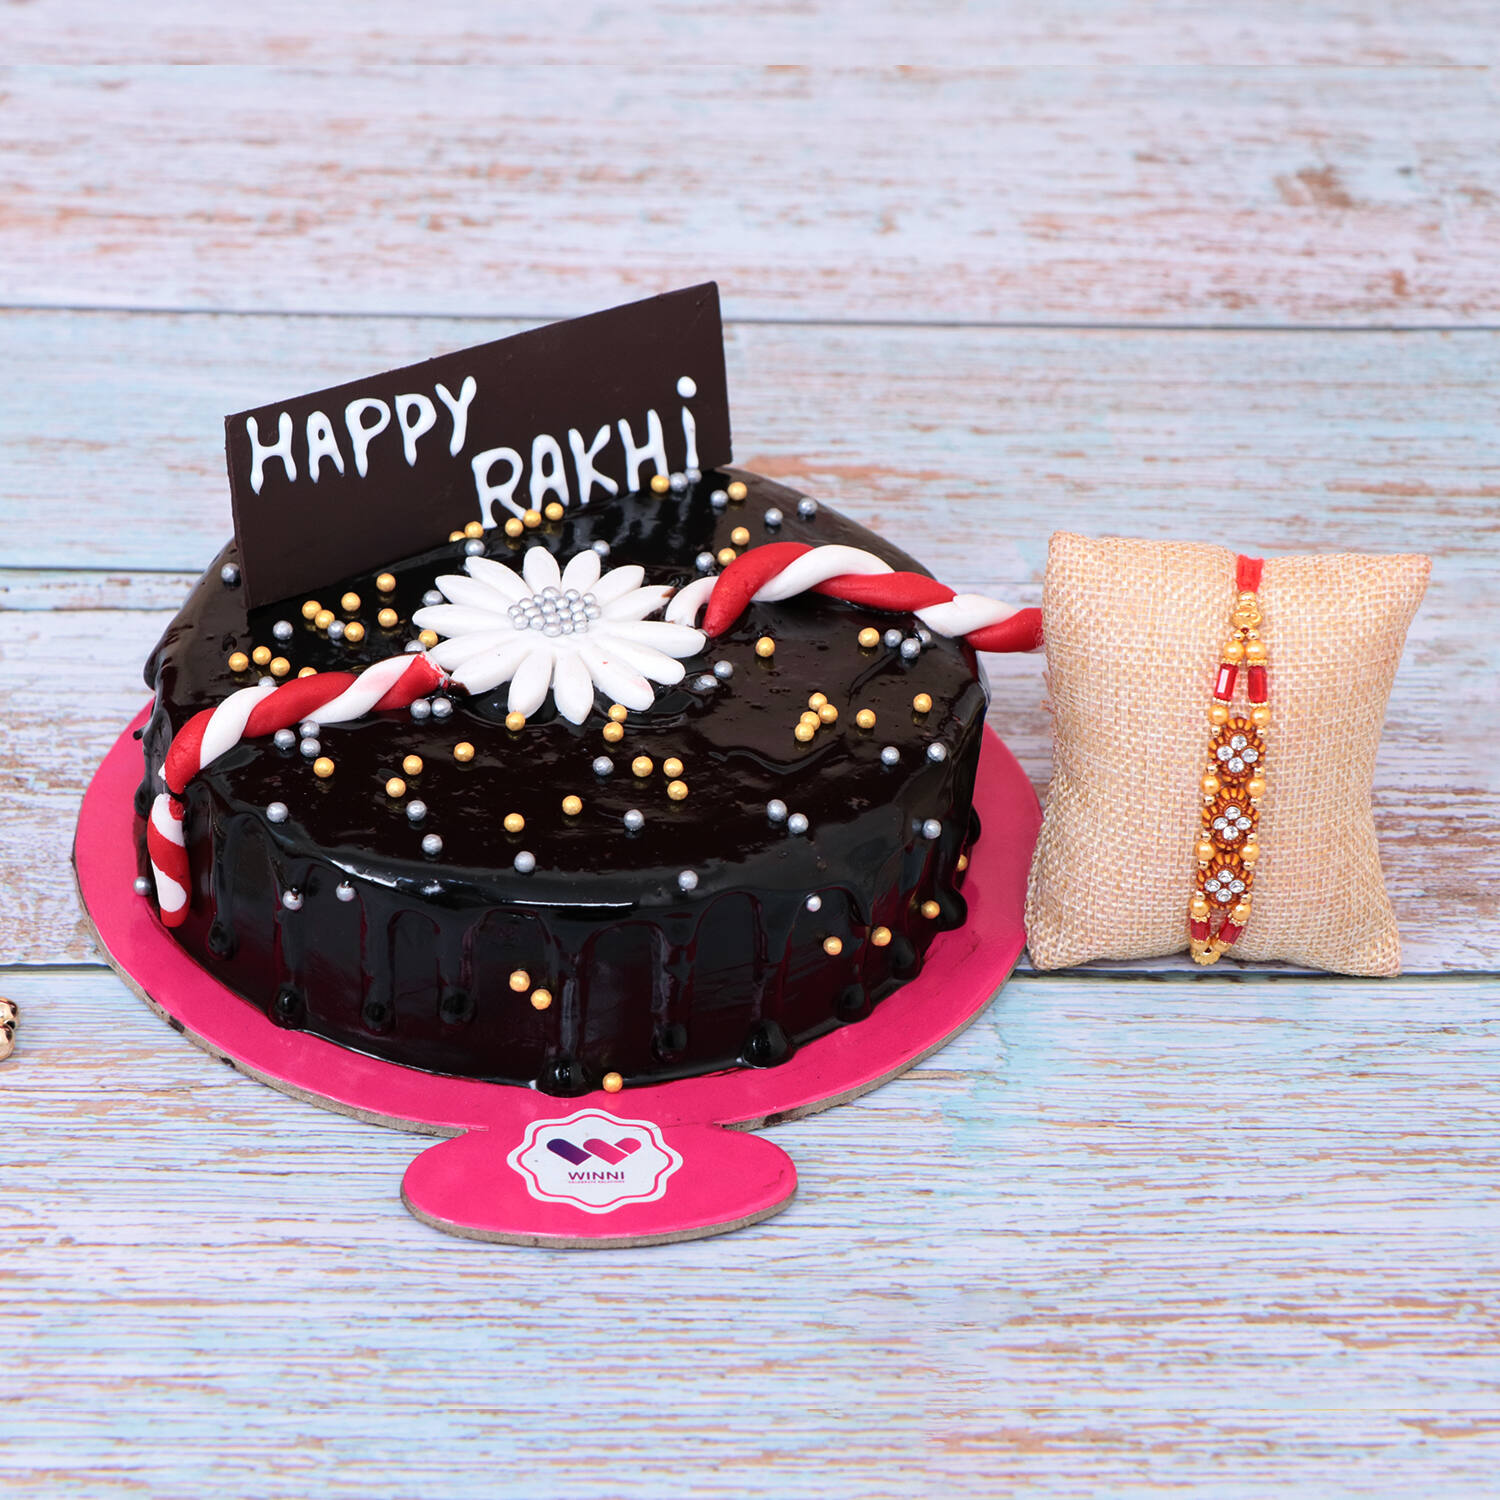 Online Meena Thread Rakhi with Happy Rakhi Cake Gift Delivery in UAE - FNP